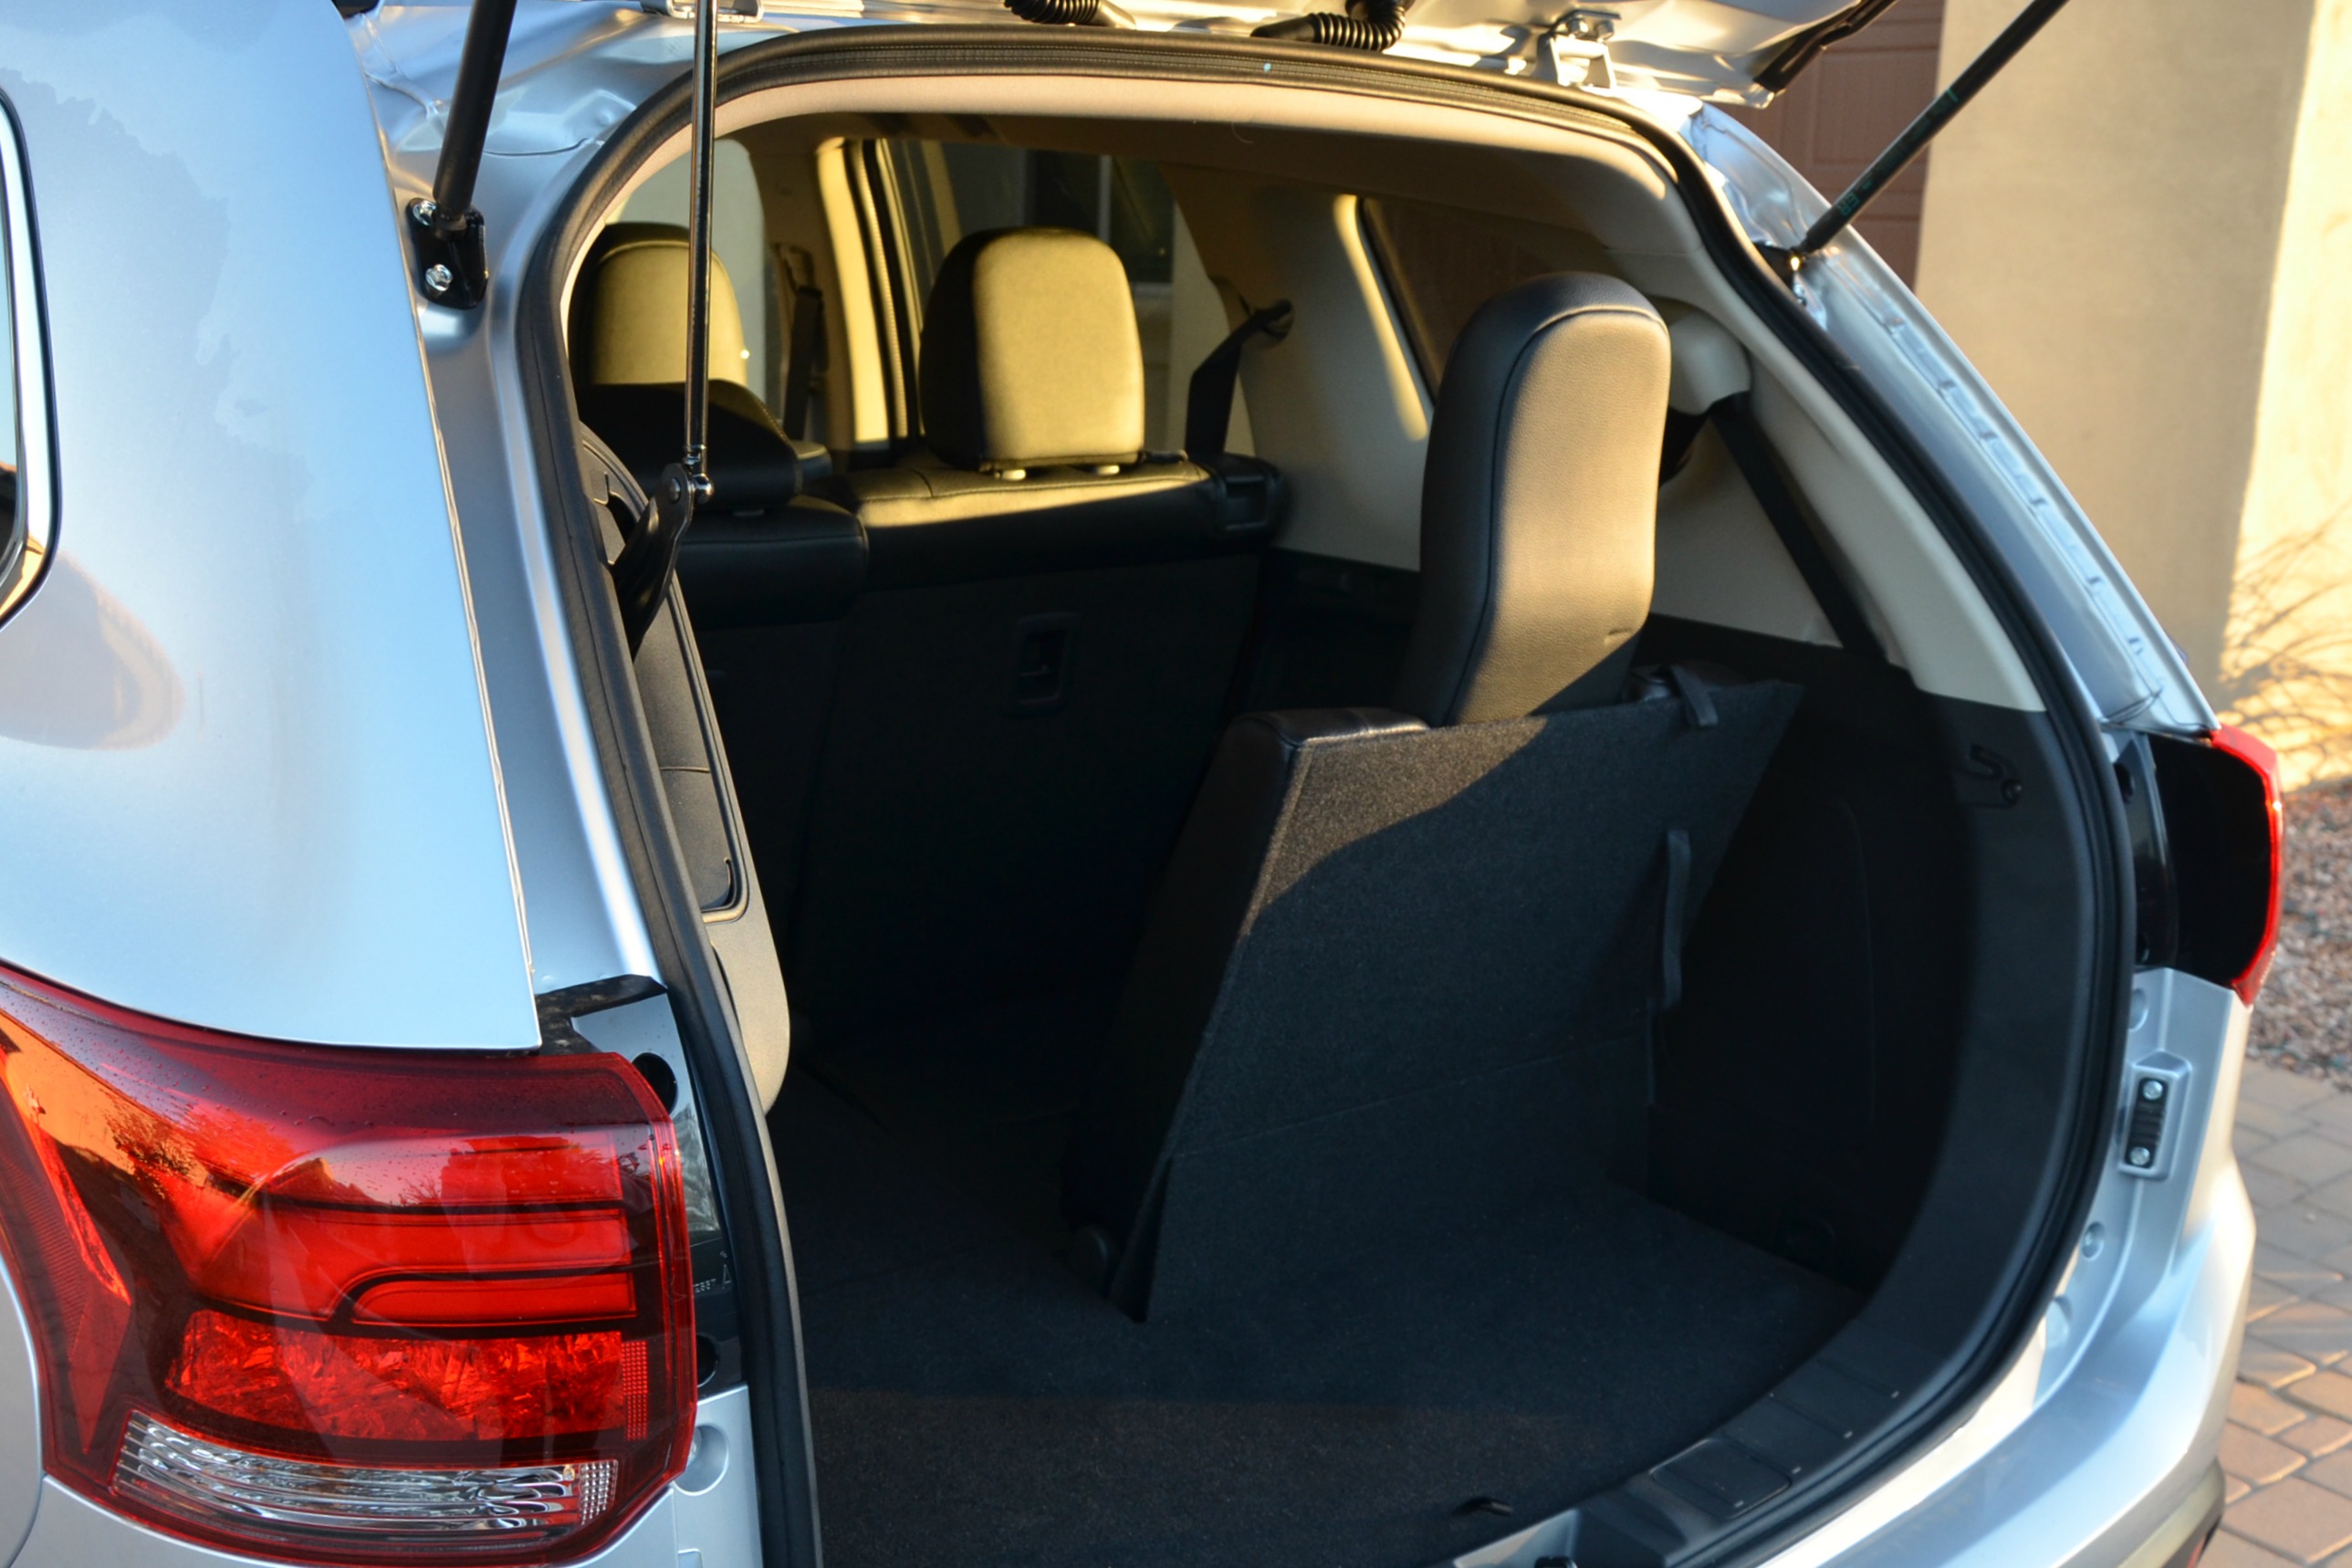 Mitsubishi Outlander seat configuration